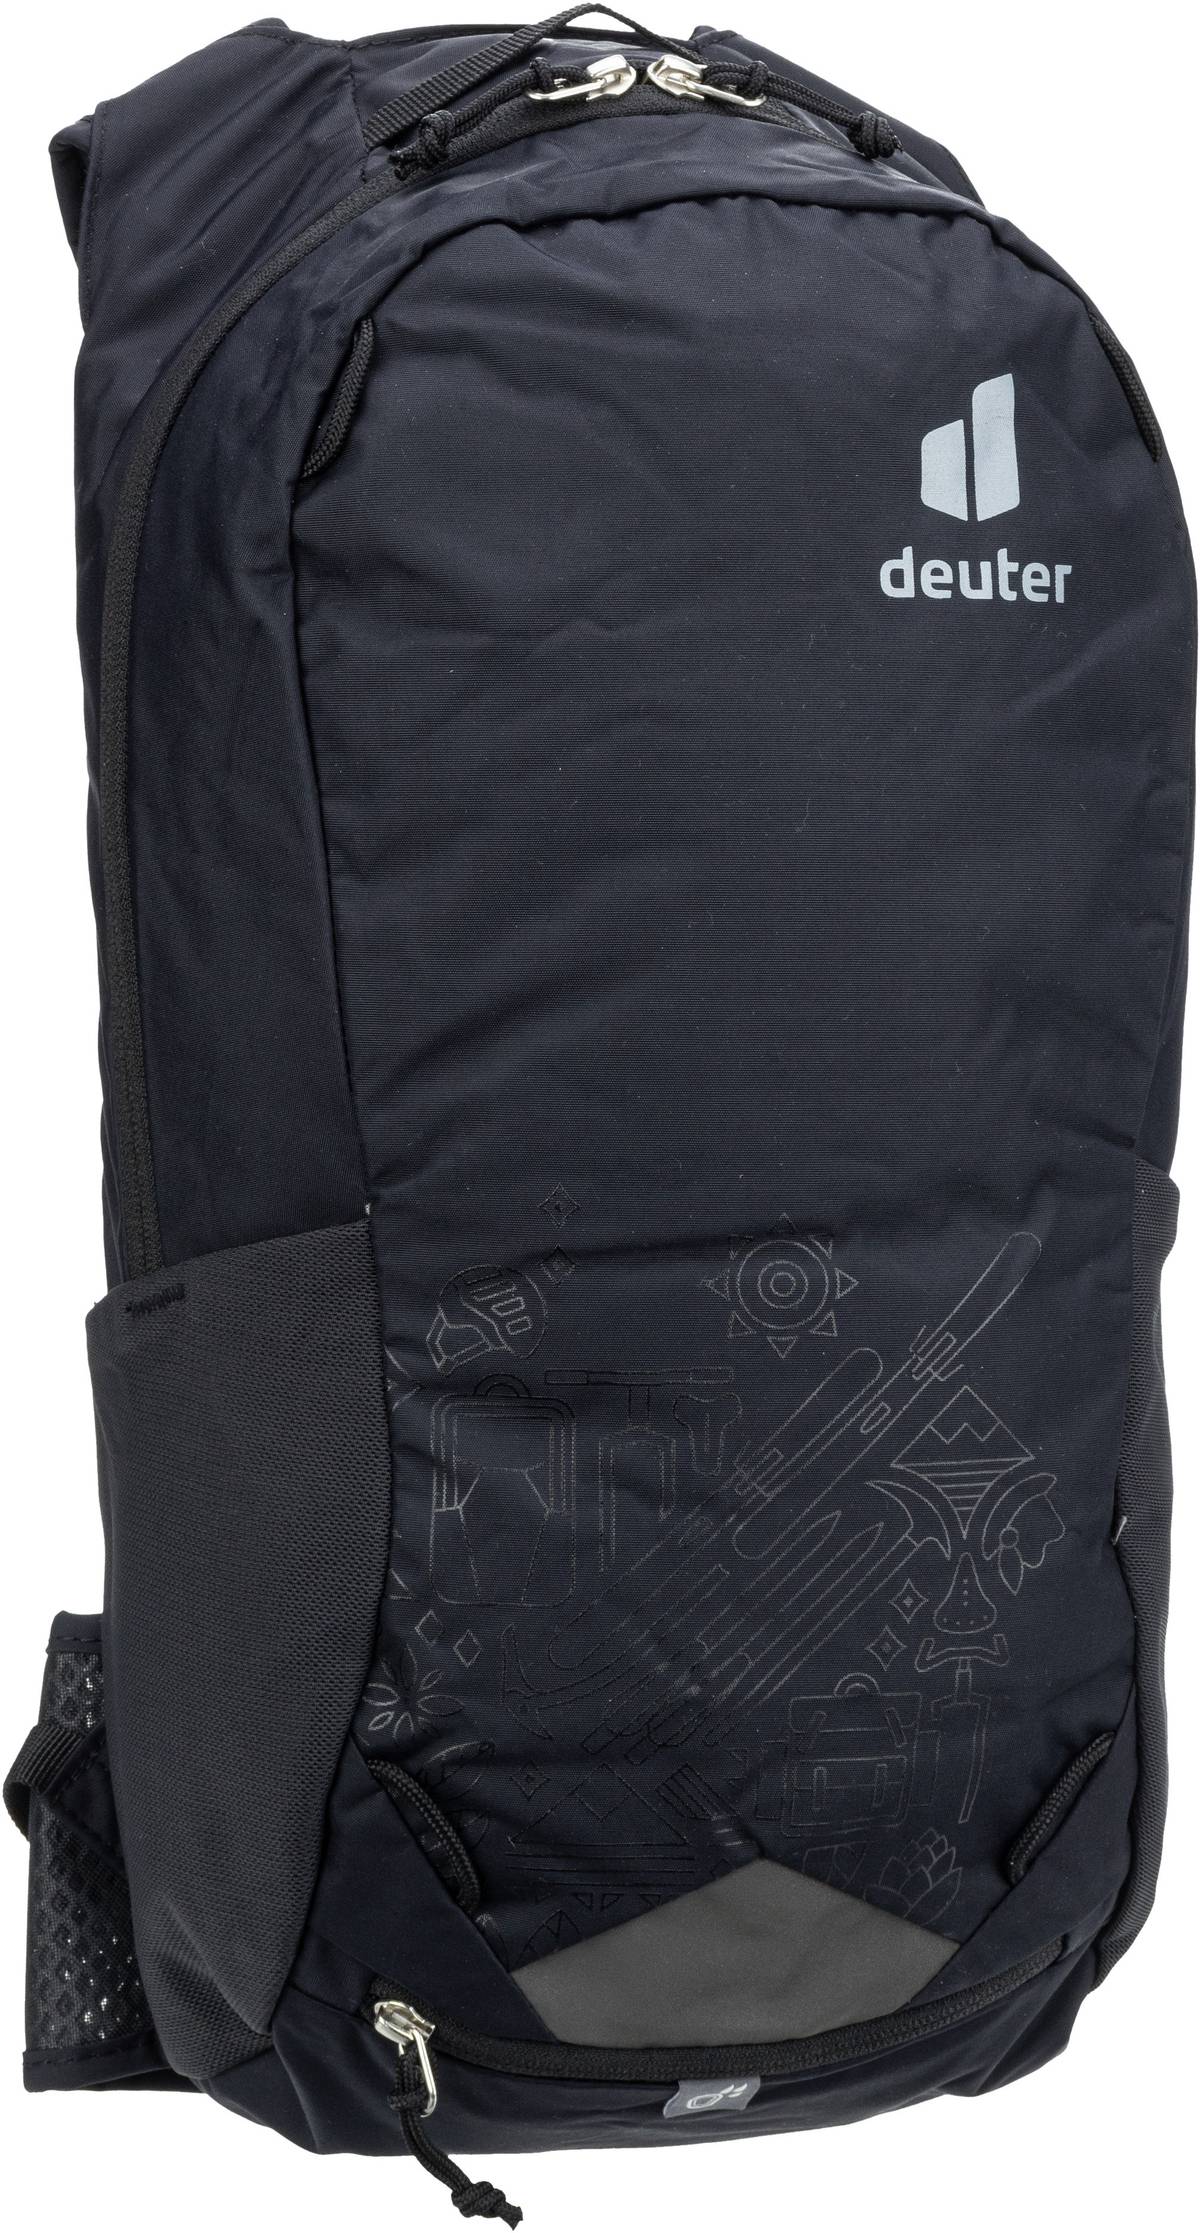 Deuter Race 12 125th Anniversary Edition  in Schwarz (12 Liter), Rucksack / Backpack